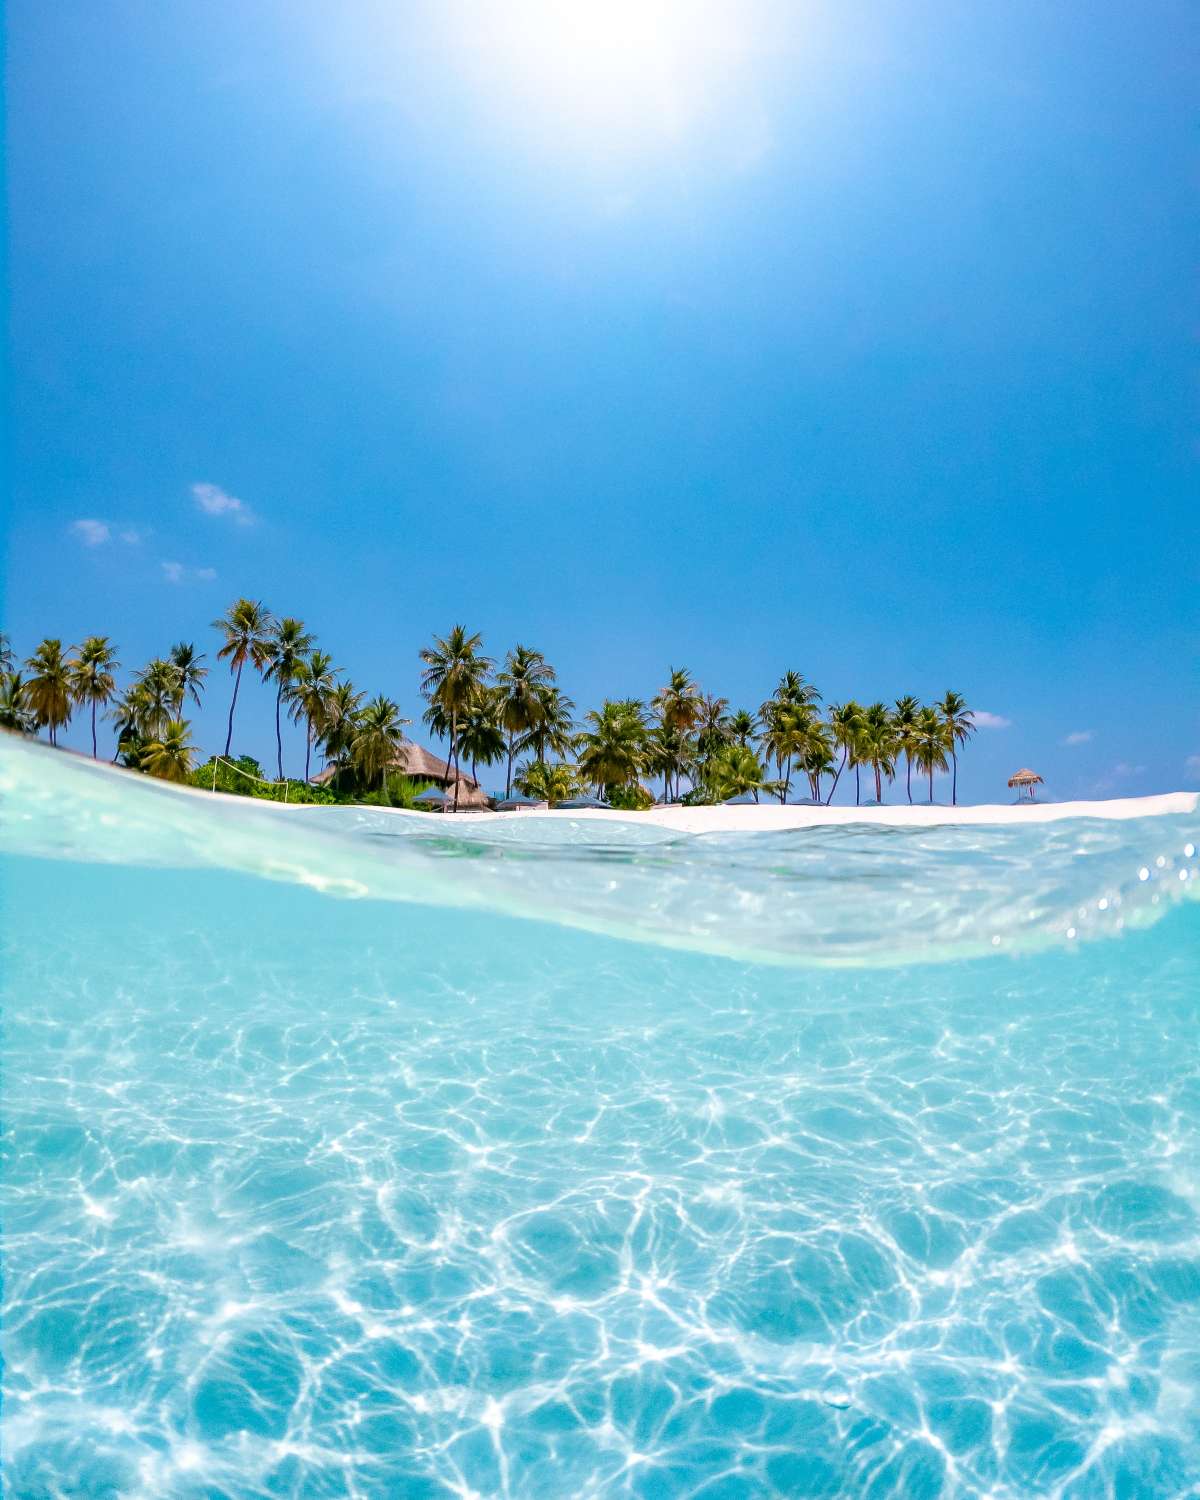 Four Seasons Resort Maldives